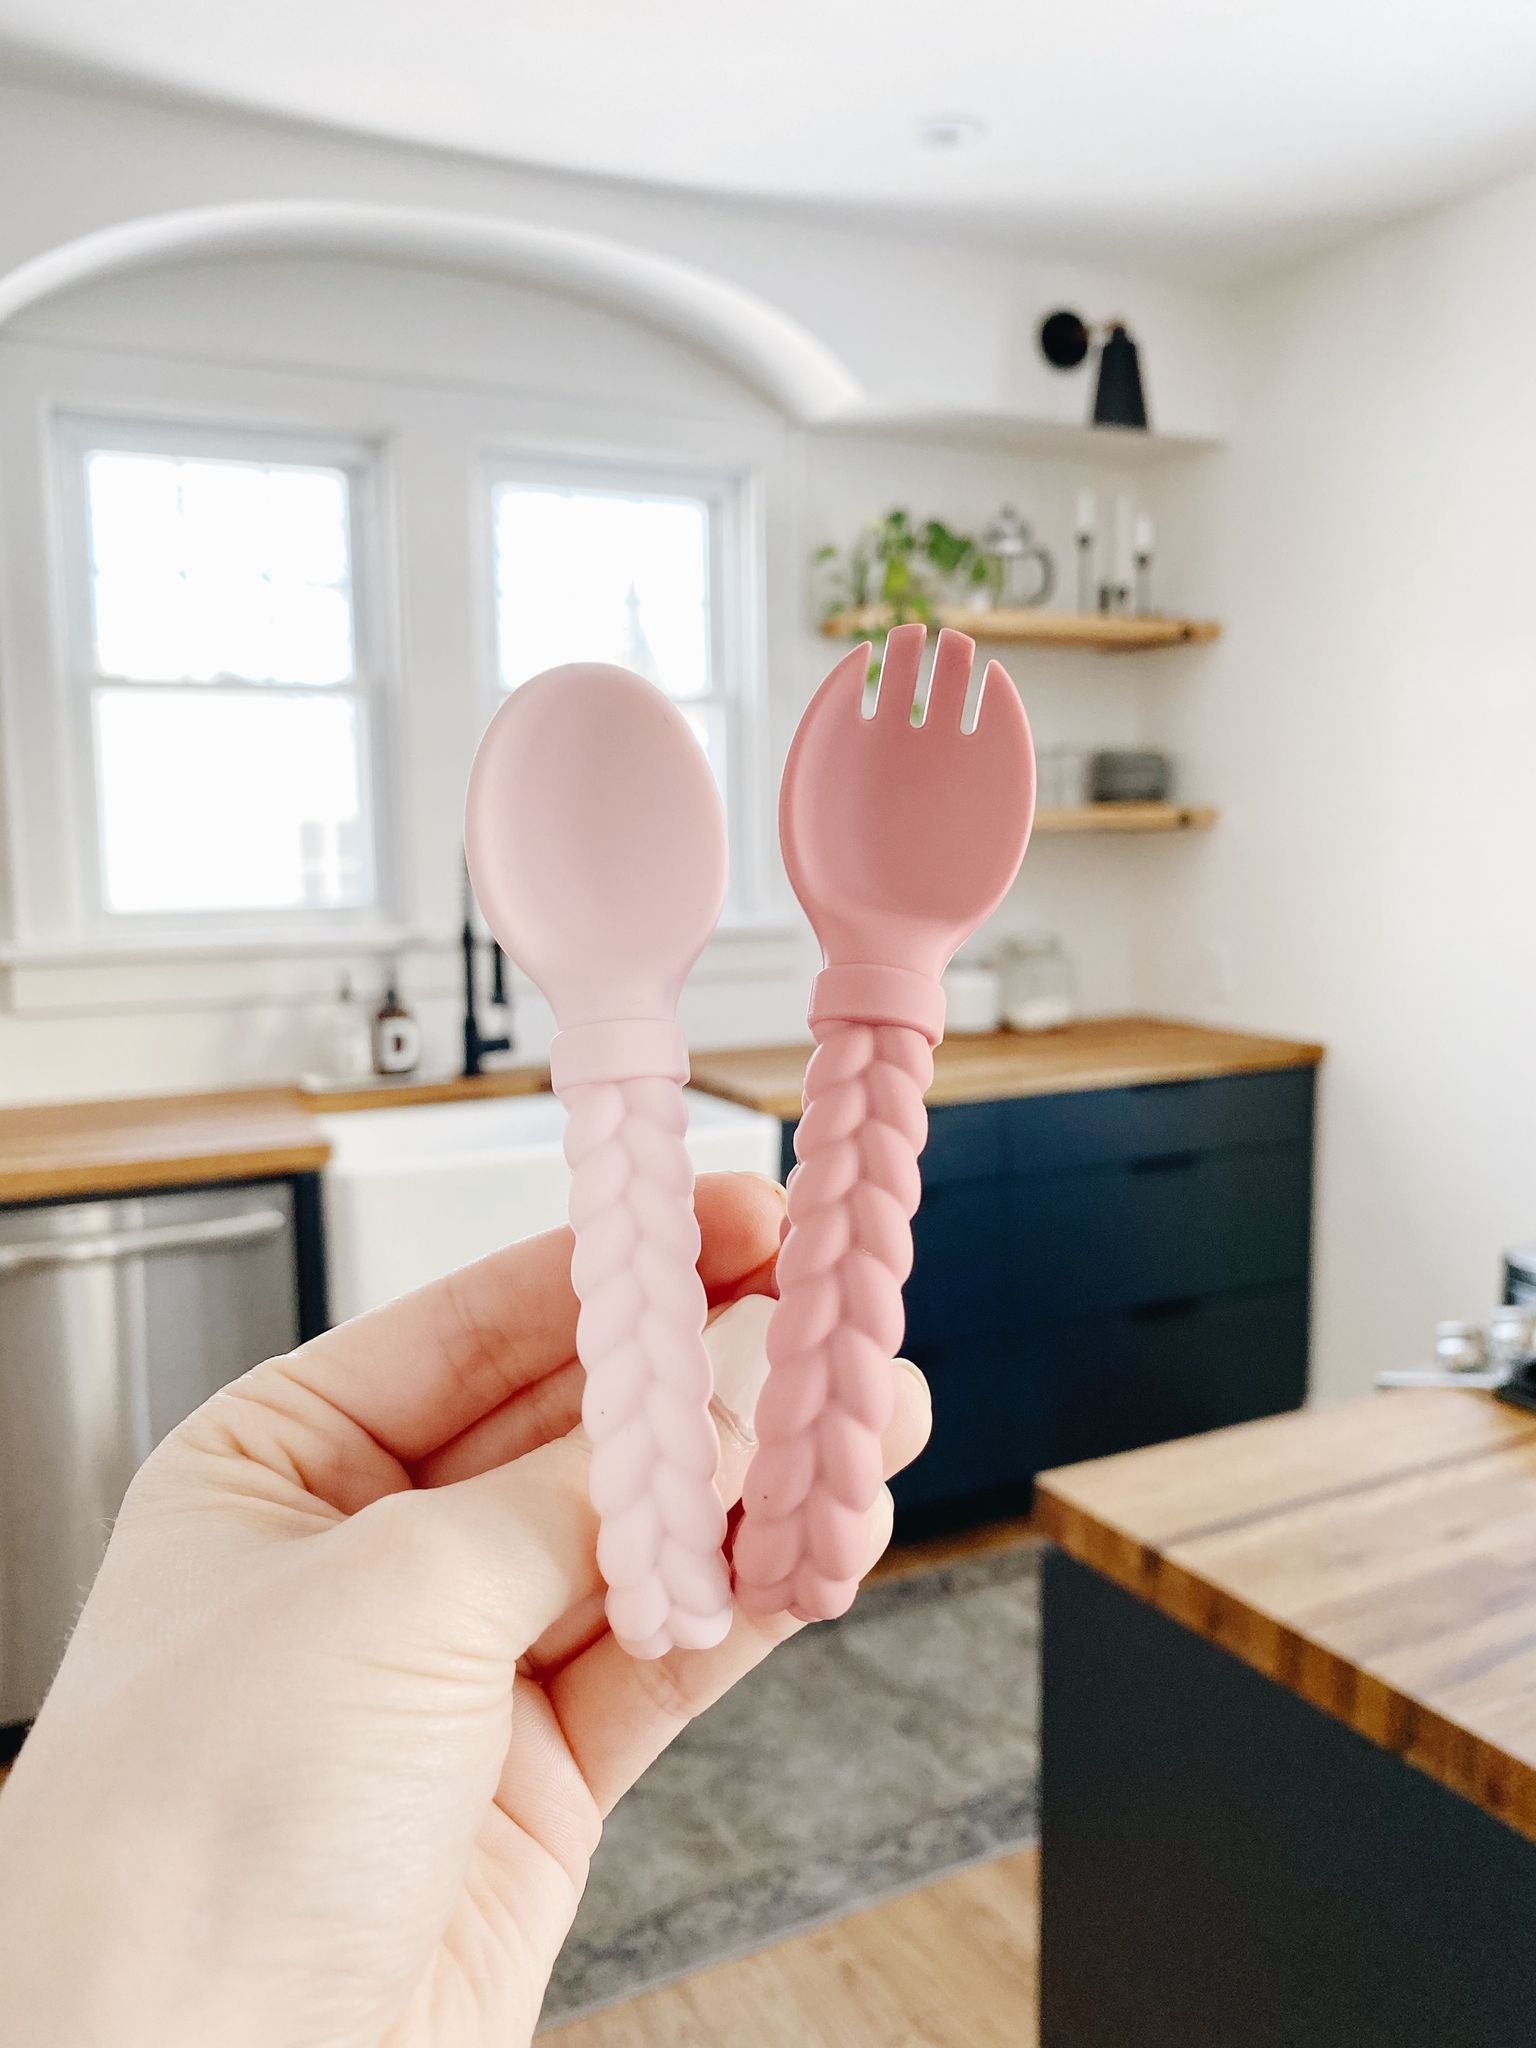 Fork & Spoon Set | Pink